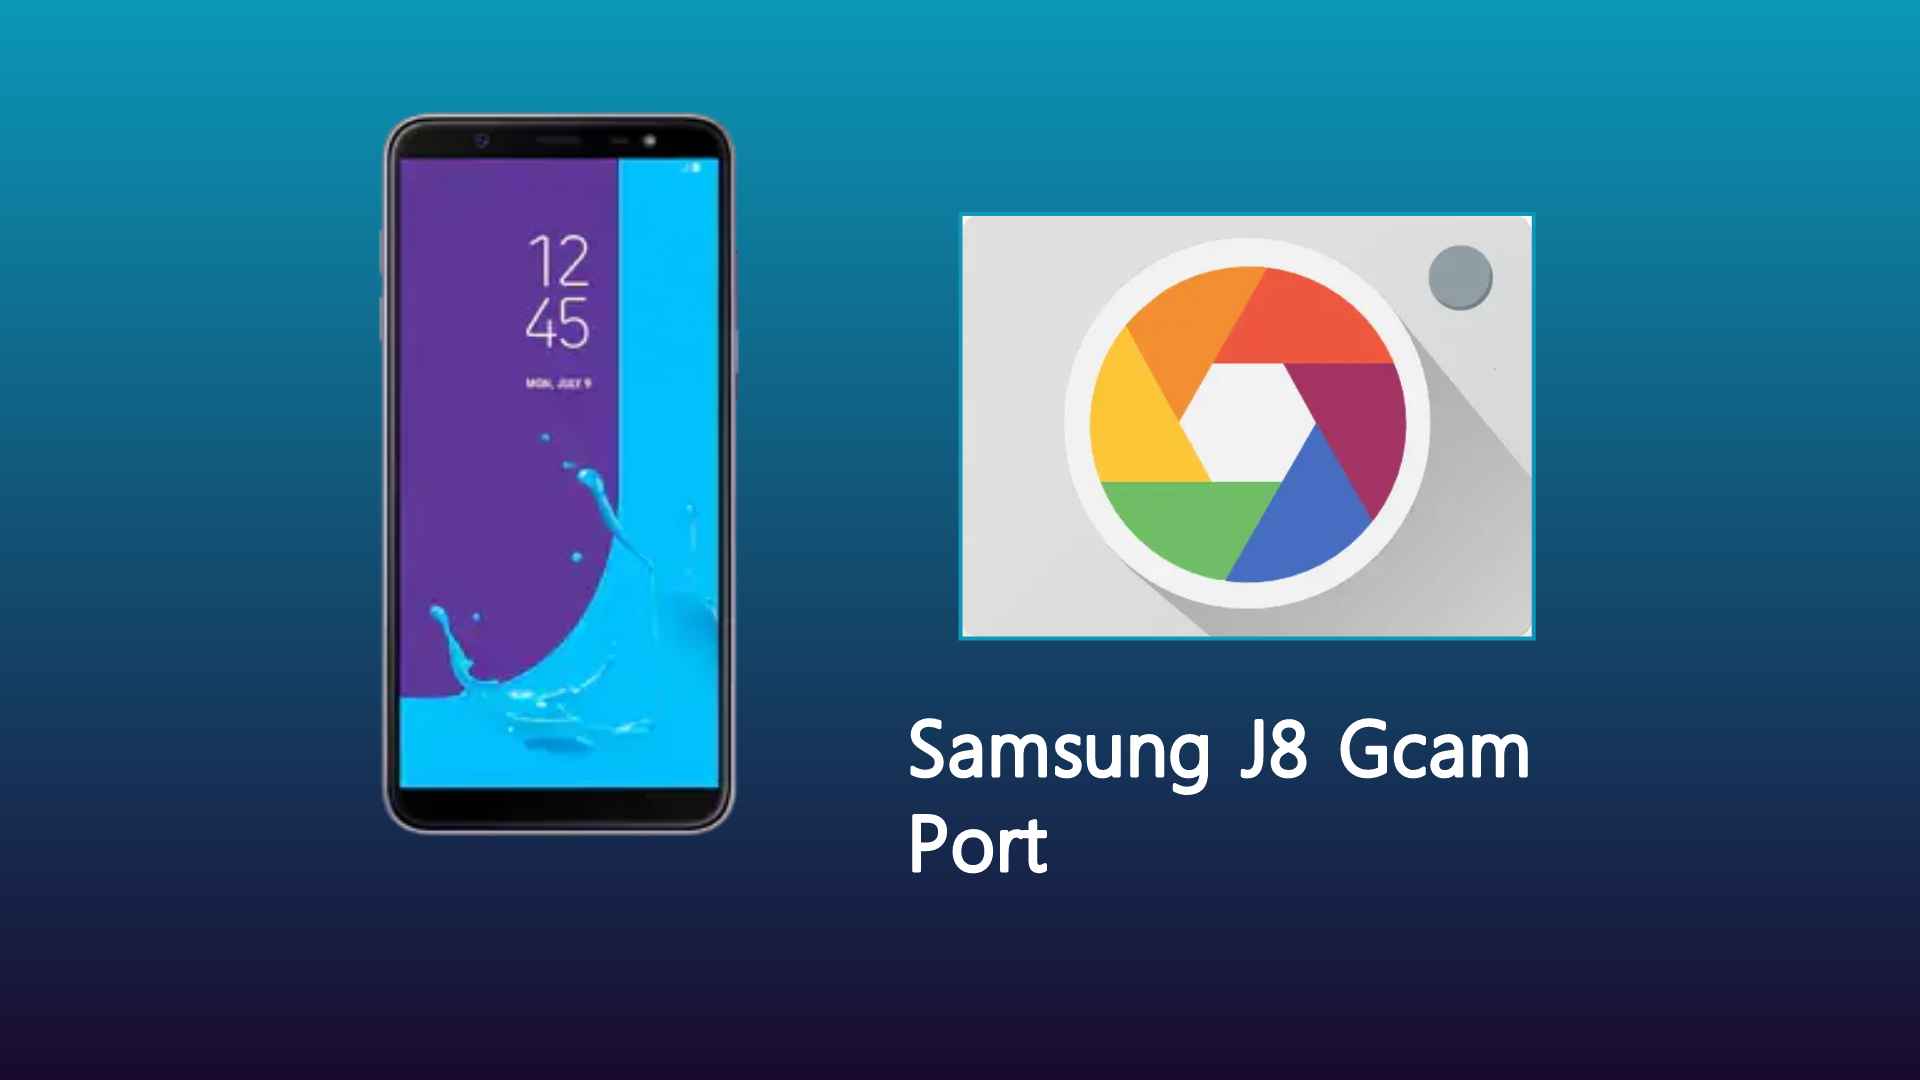 Samsung J8 Gcam Port